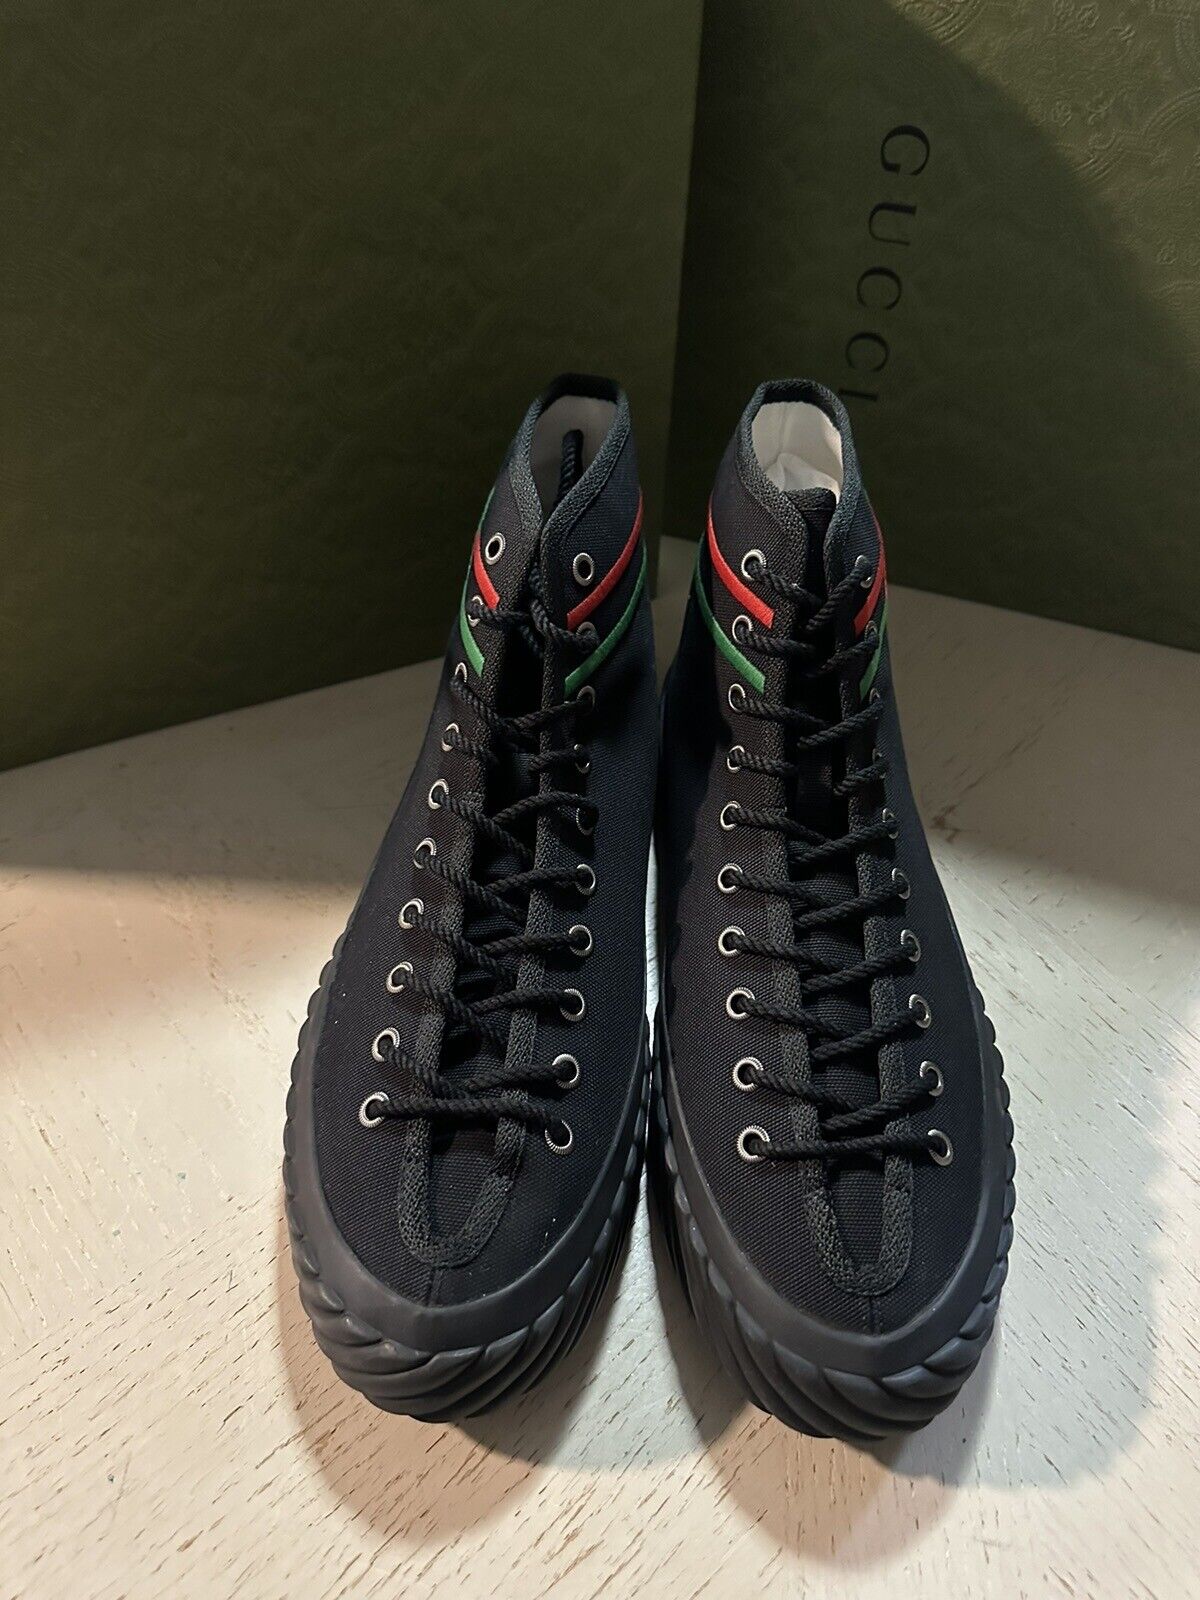 New $750 Gucci Men Canvas High-top Sneakers Black 10 US/9.5 UK 703033